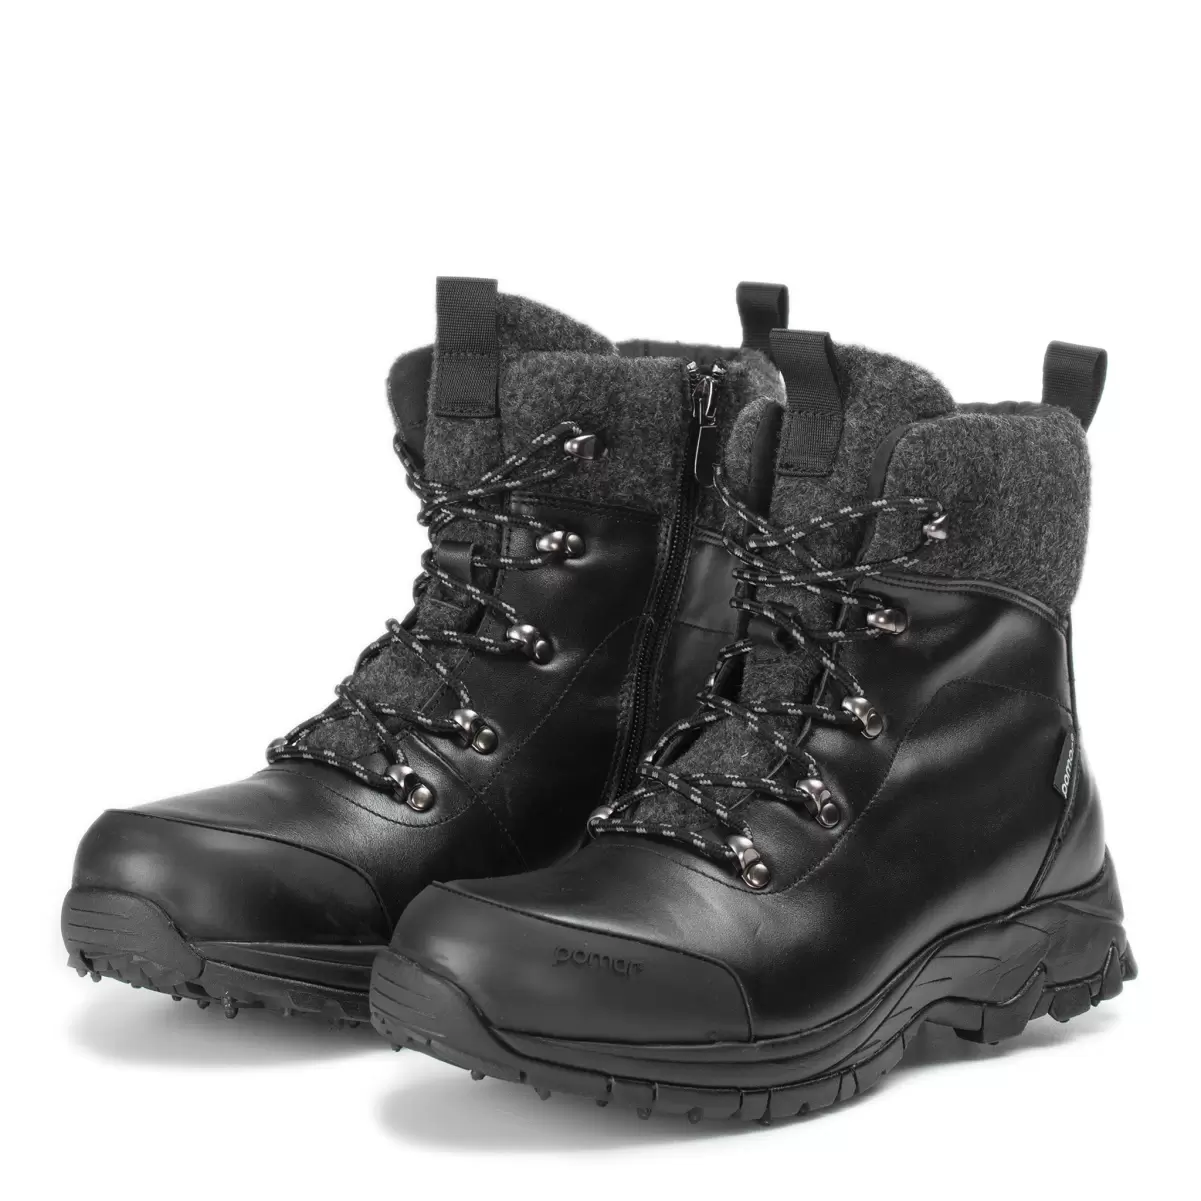 Winter Boots Pomarfin Oy Black Nappa/Gr Felt/Synt.fur Lining Otso Men's Spike Winter Boots Men - 3